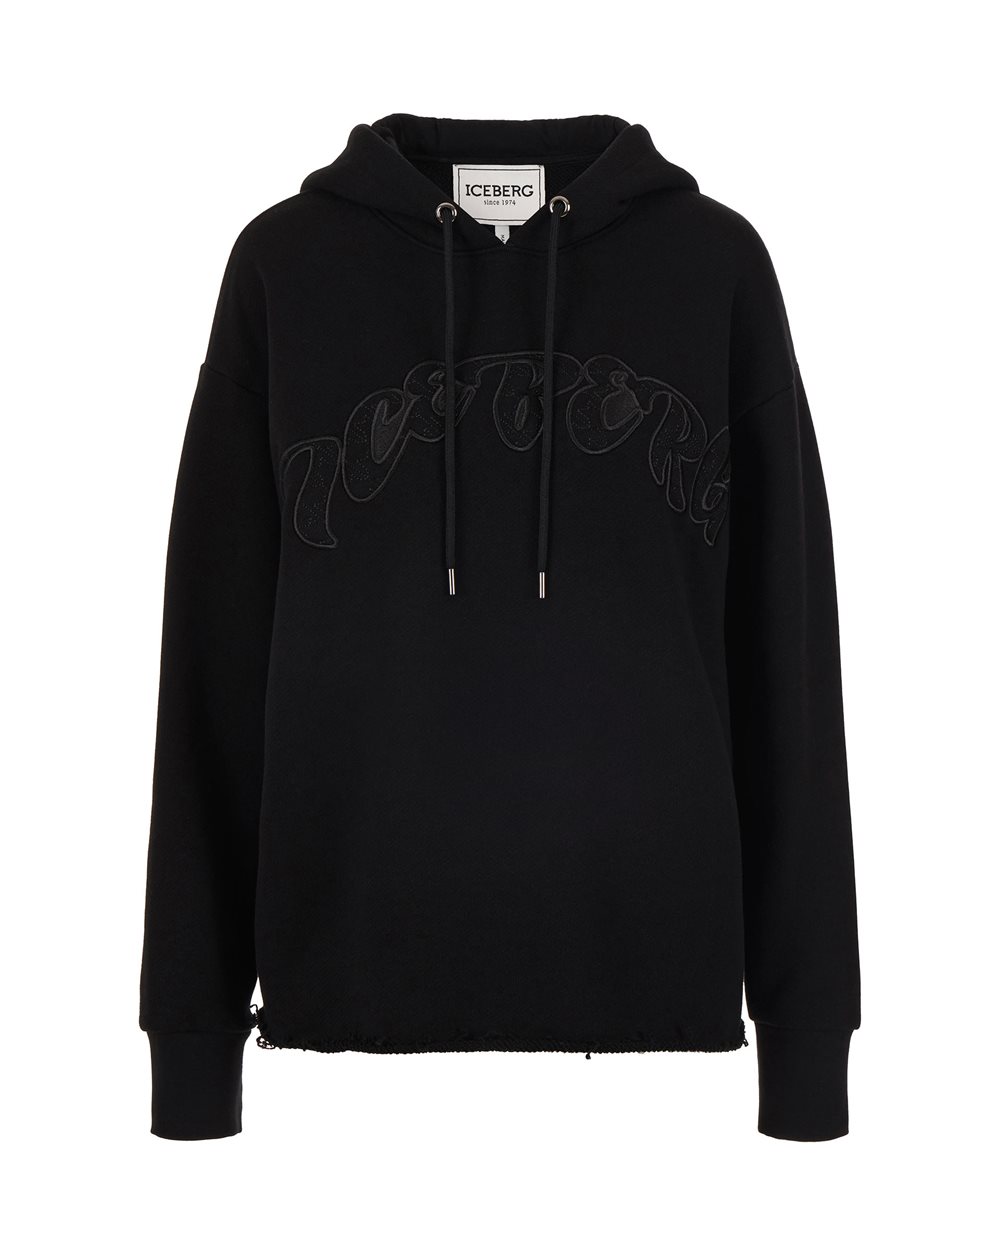 Sweatshirt with hood and logo | Iceberg - Official Website